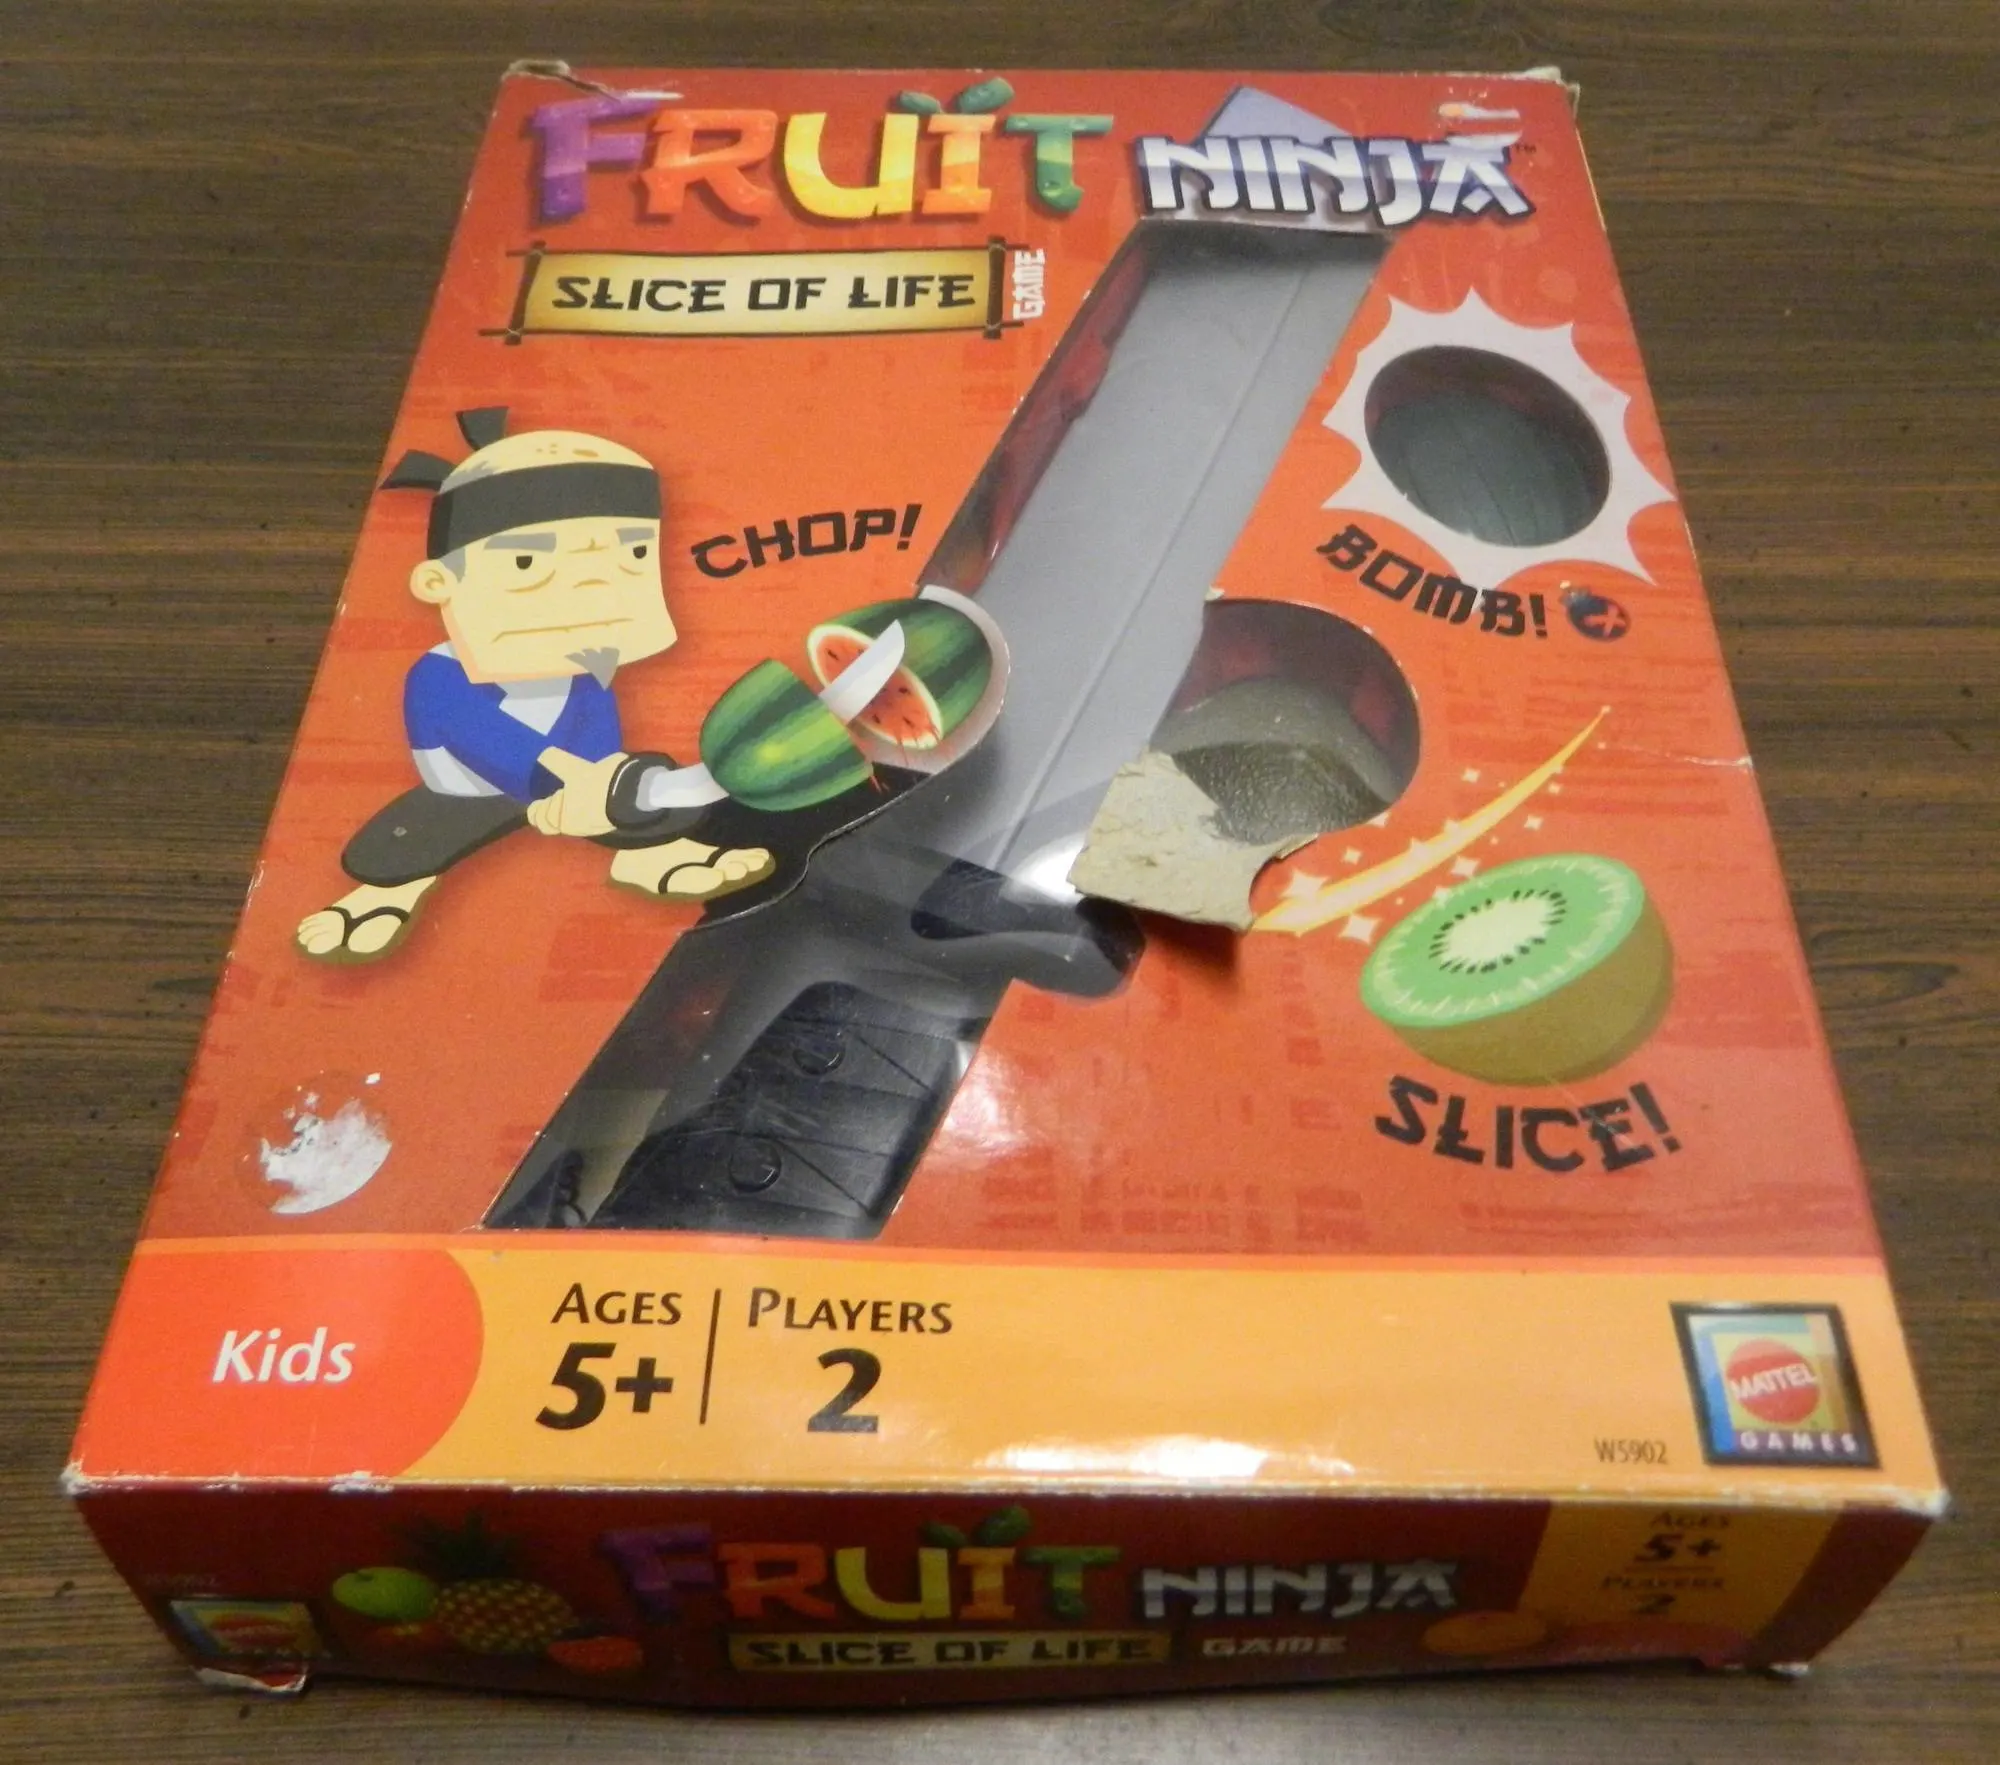 Box for Fruit Ninja: Slice of Life